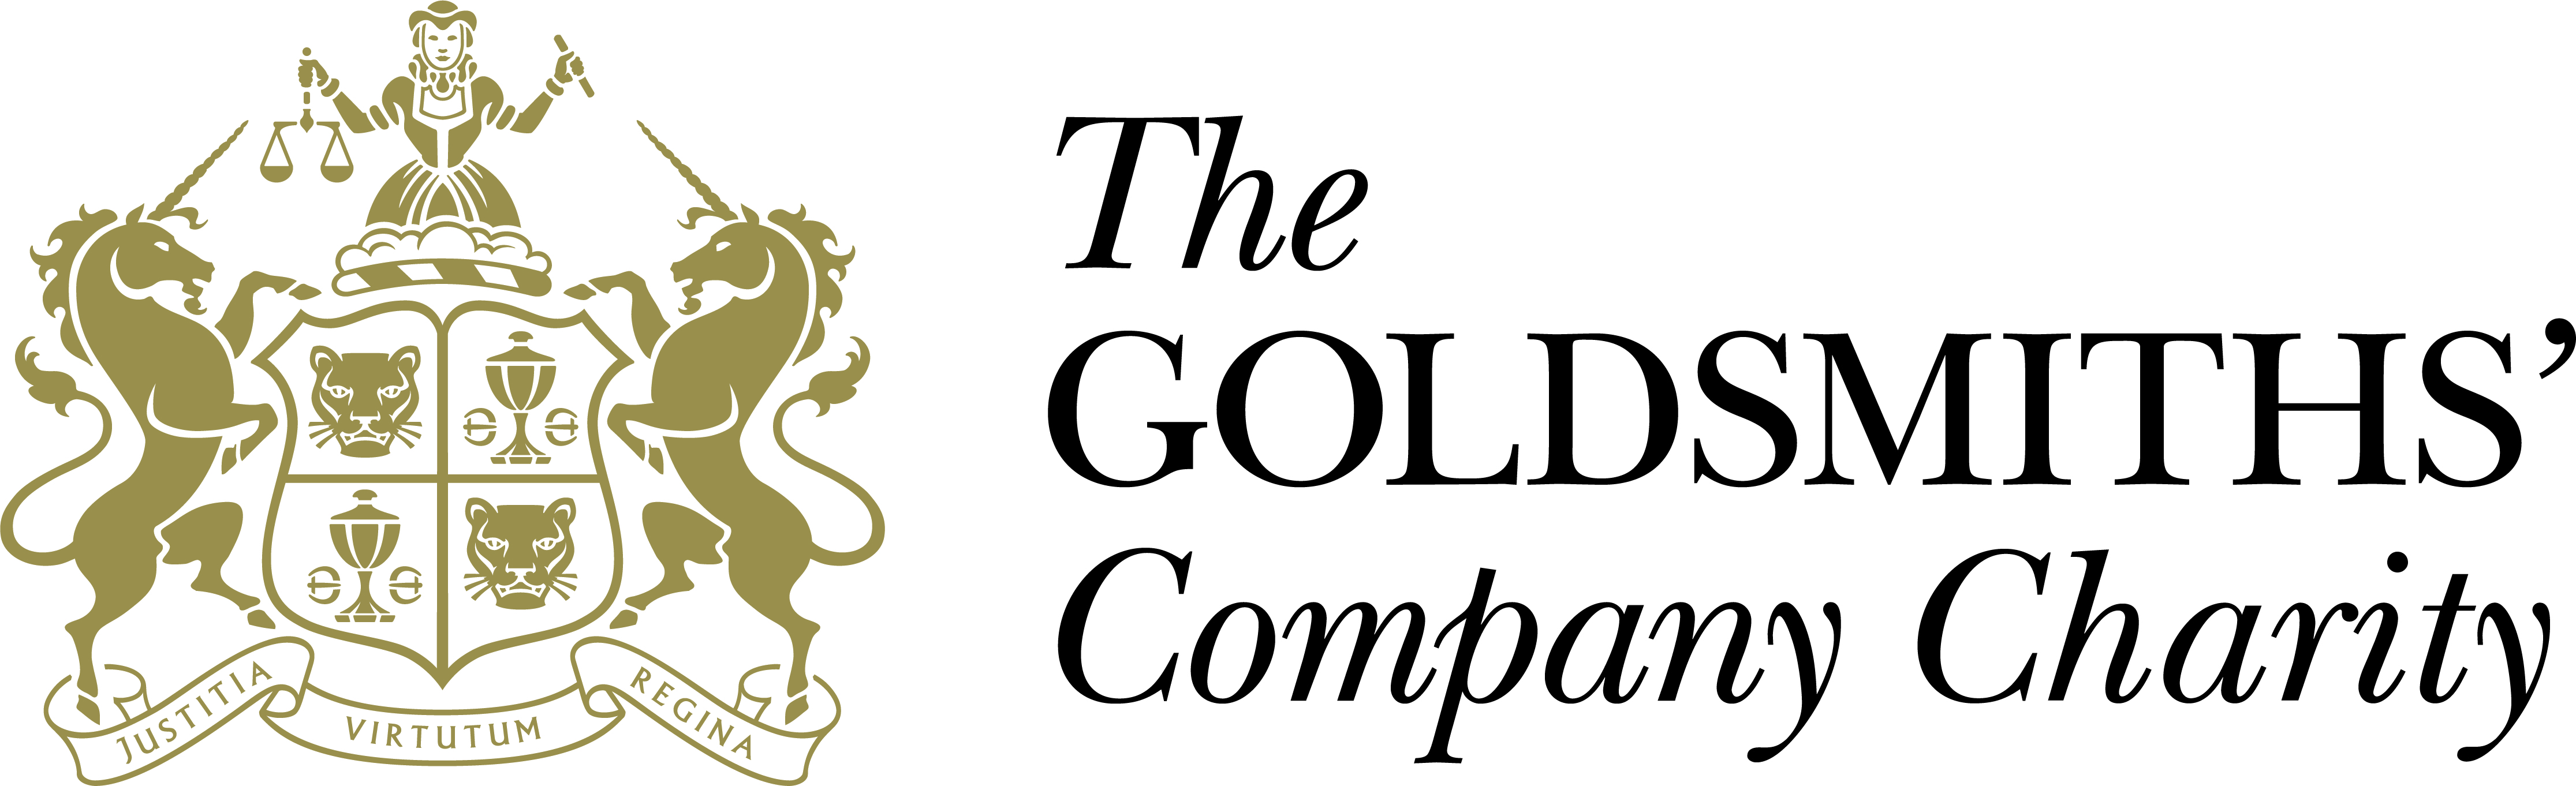 The Goldsmiths' Company Charity logo